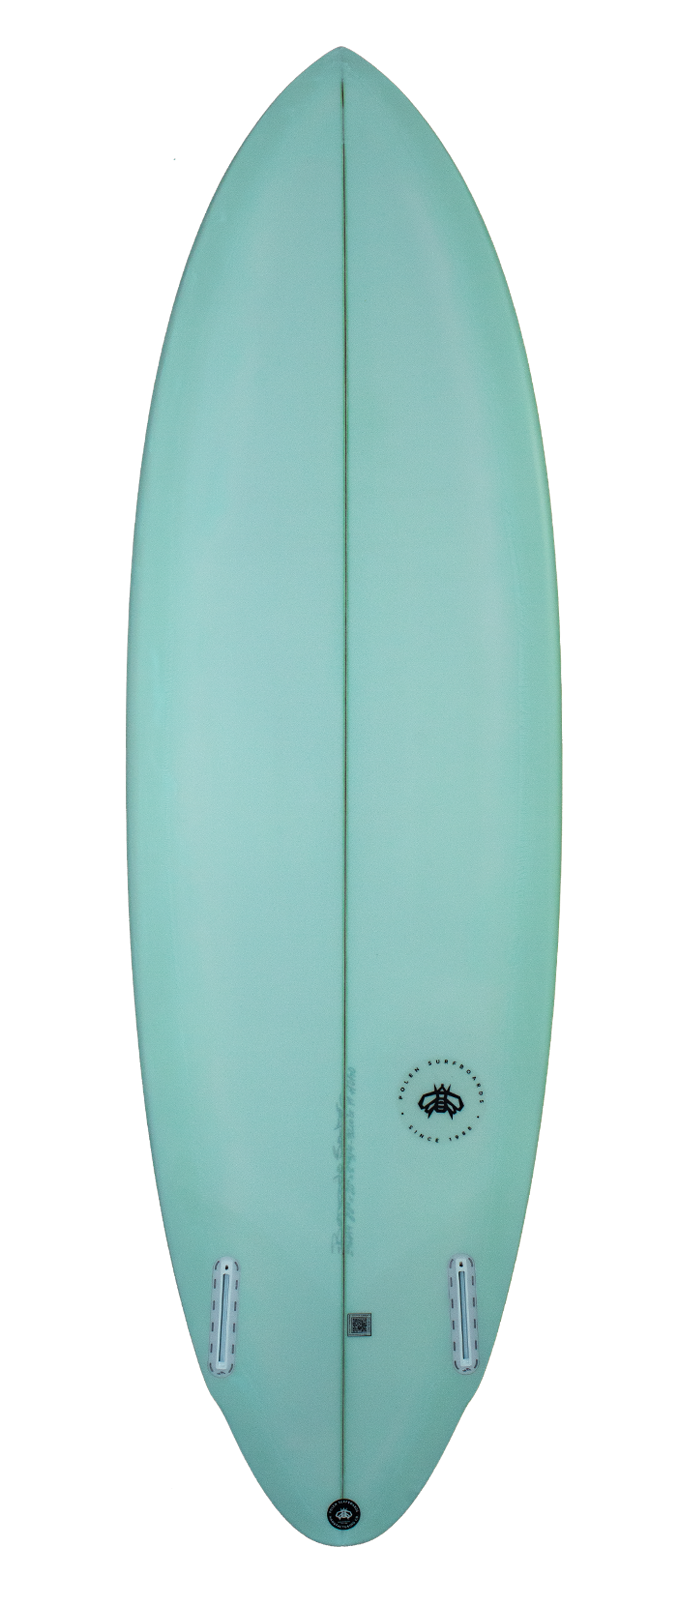 FAST SLICE surfboard model bottom